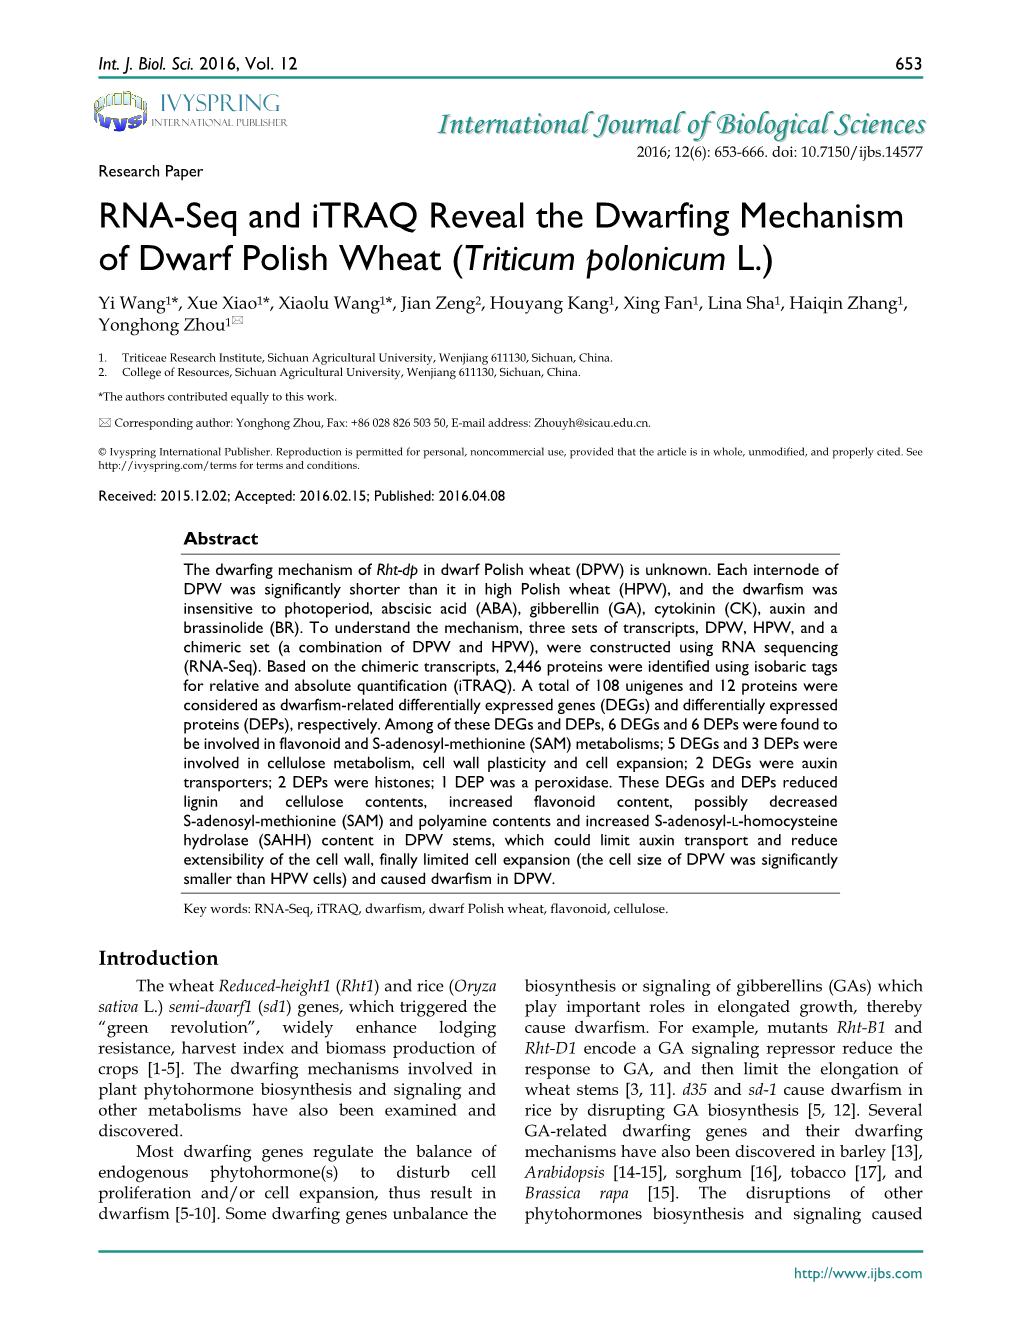 RNA-Seq and Itraq Reveal the Dwarfing Mechanism of Dwarf